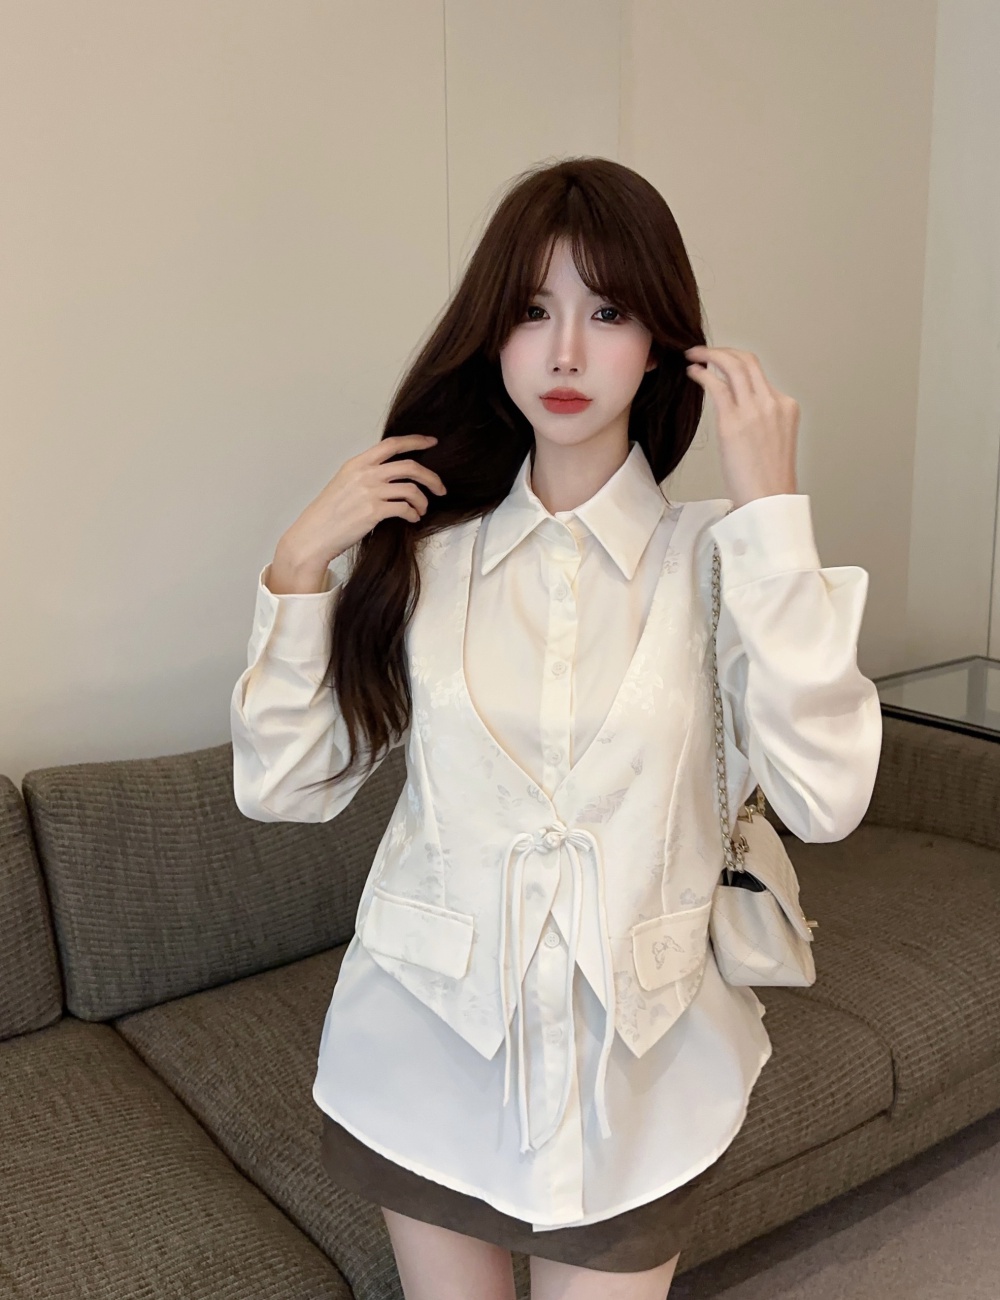 Pseudo-two splice shirt long sleeve Chinese style waistcoat